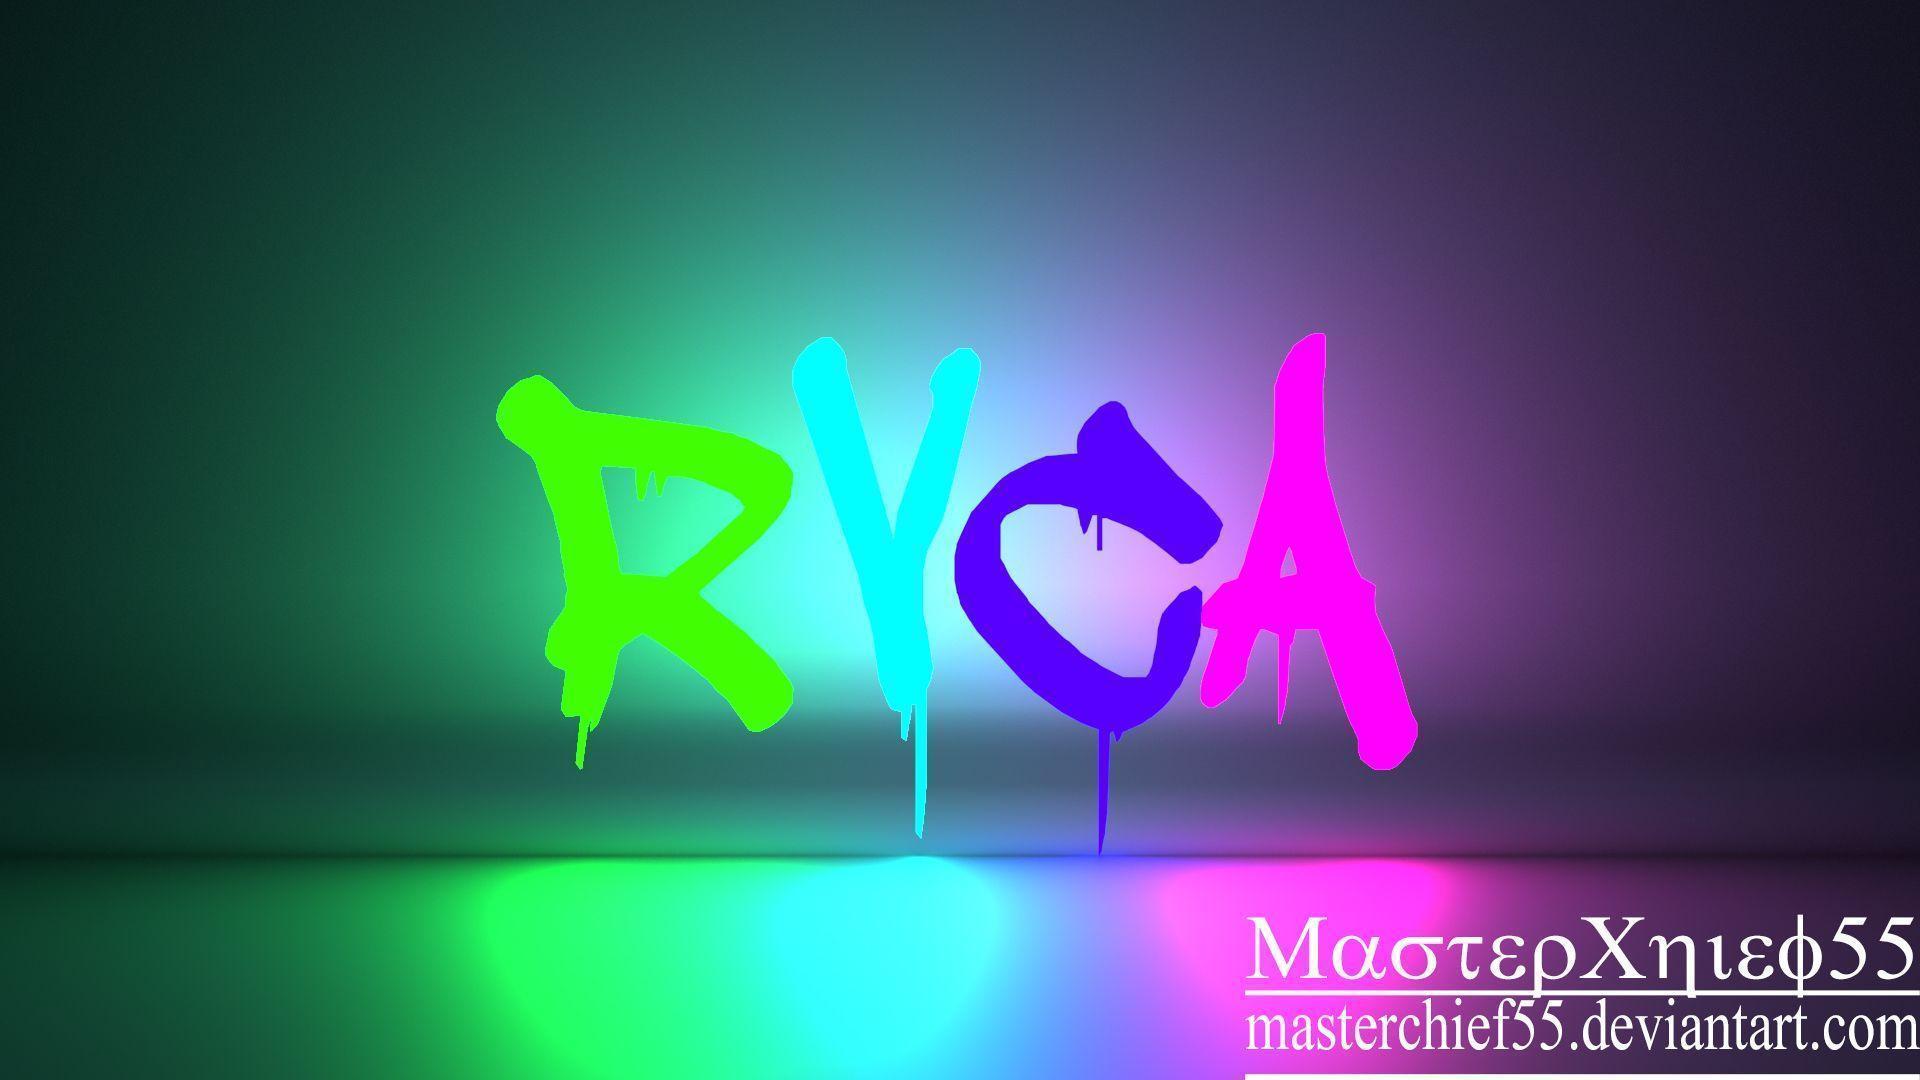 RVCA logo by MasterChief55